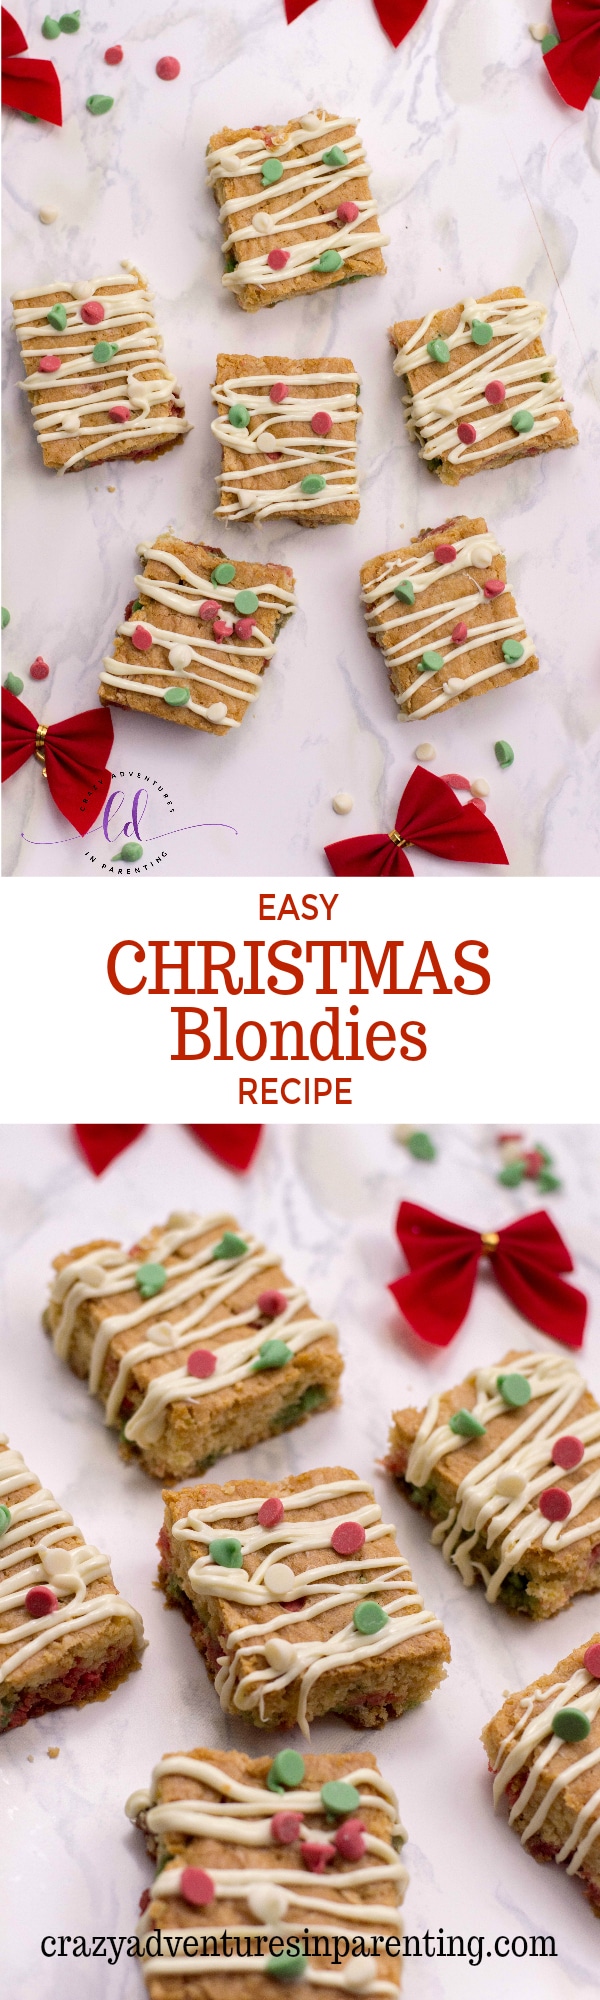 Easy Christmas Blondies Recipe